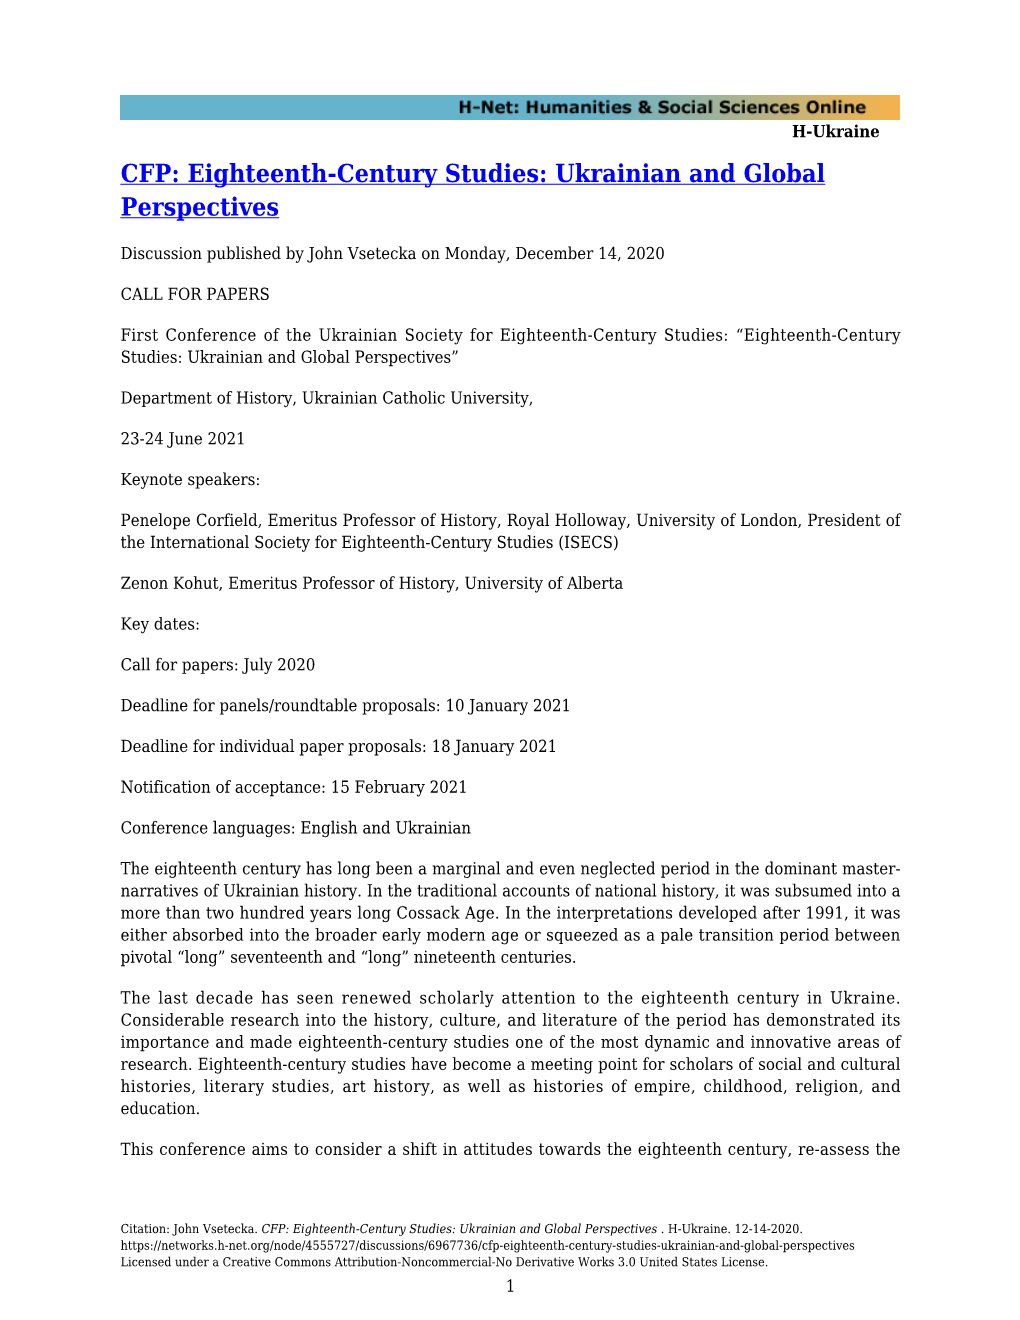 Eighteenth-Century Studies: Ukrainian and Global Perspectives